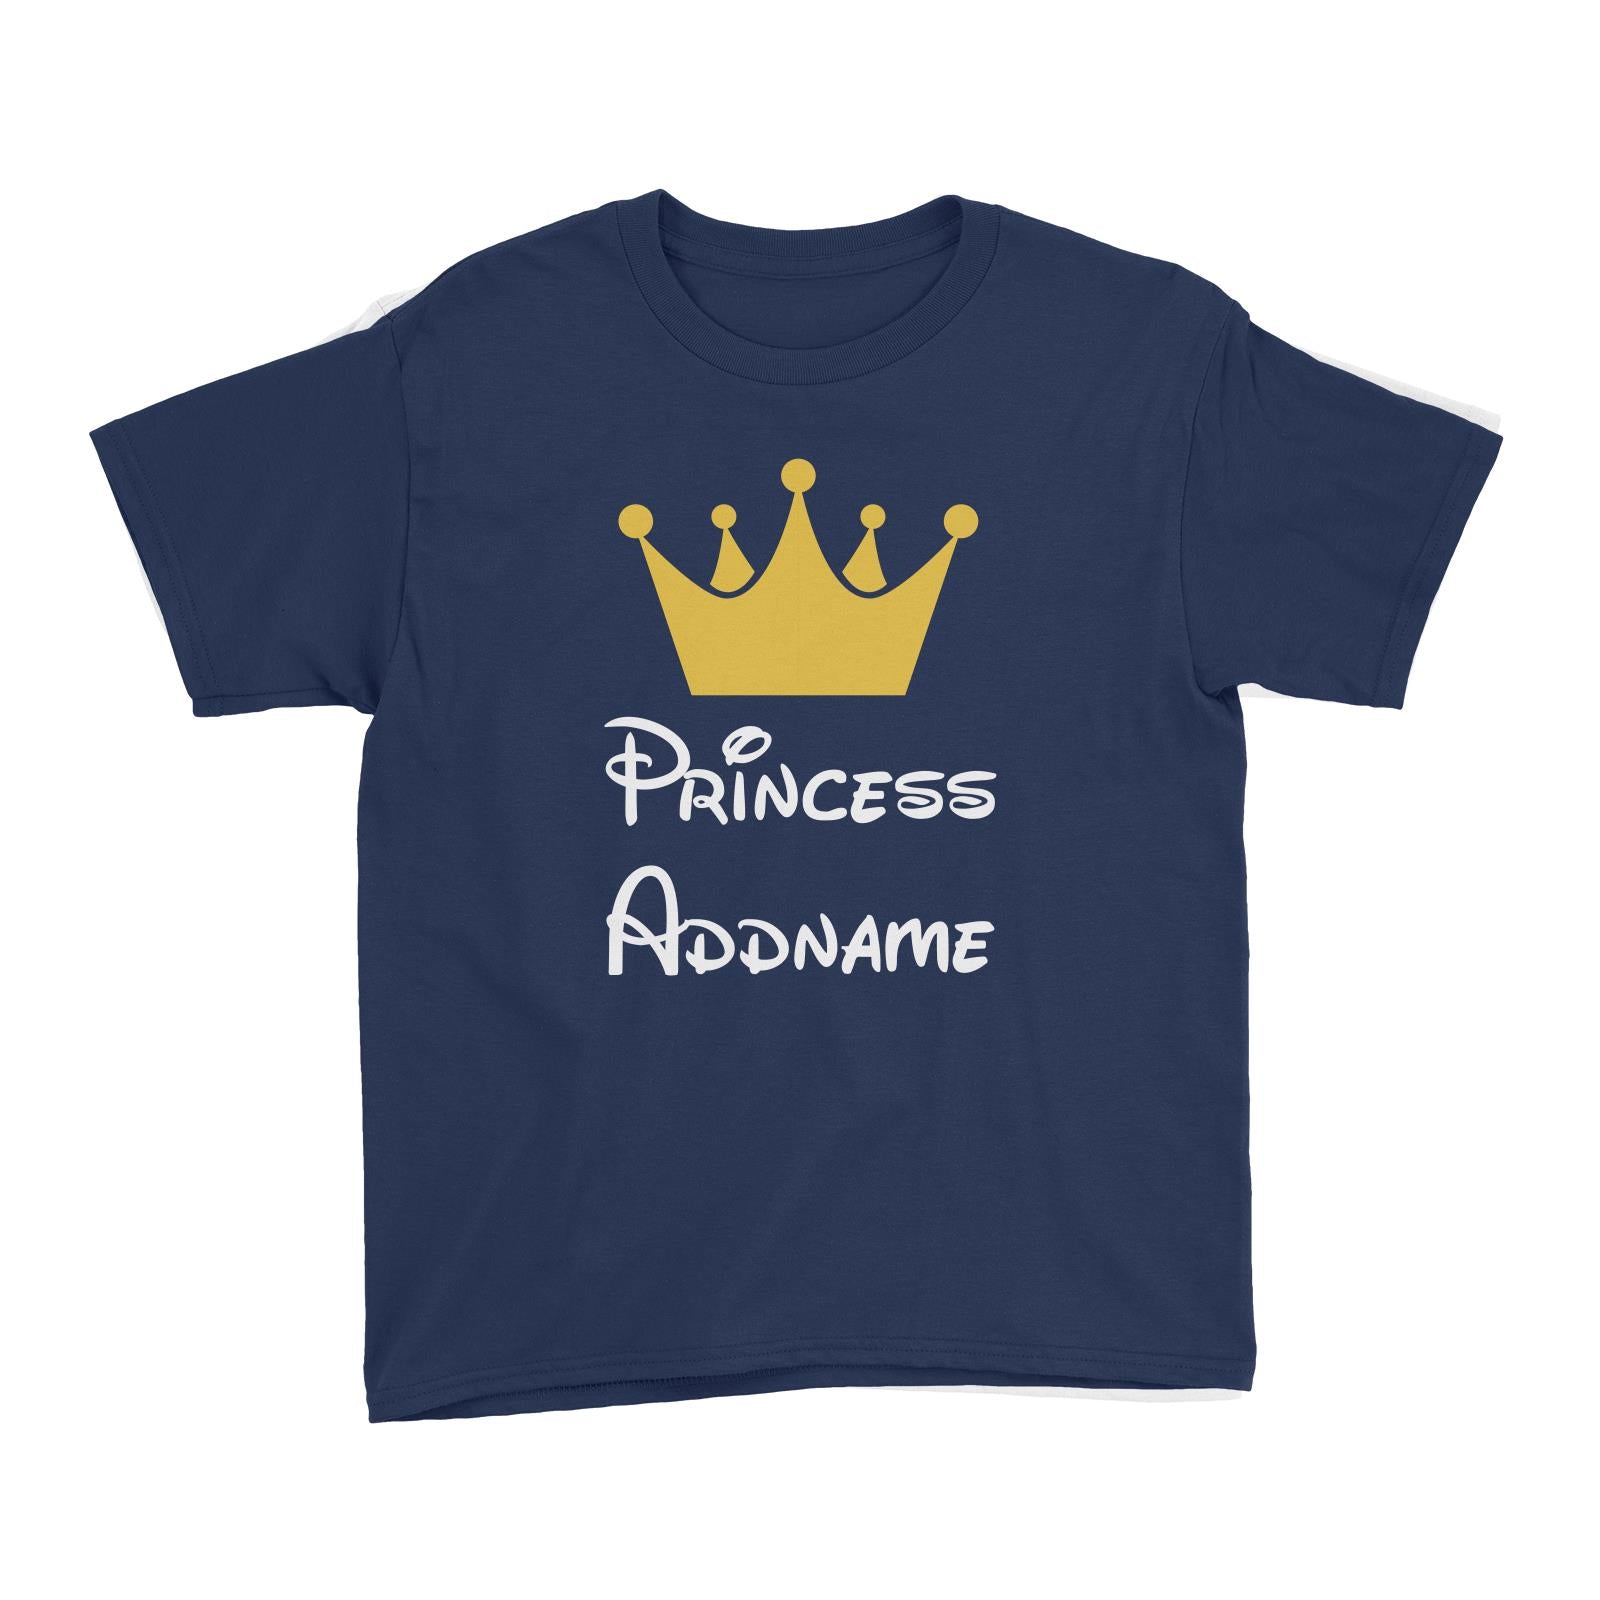 Royal Princess with Tiara Addname Kid's T-Shirt